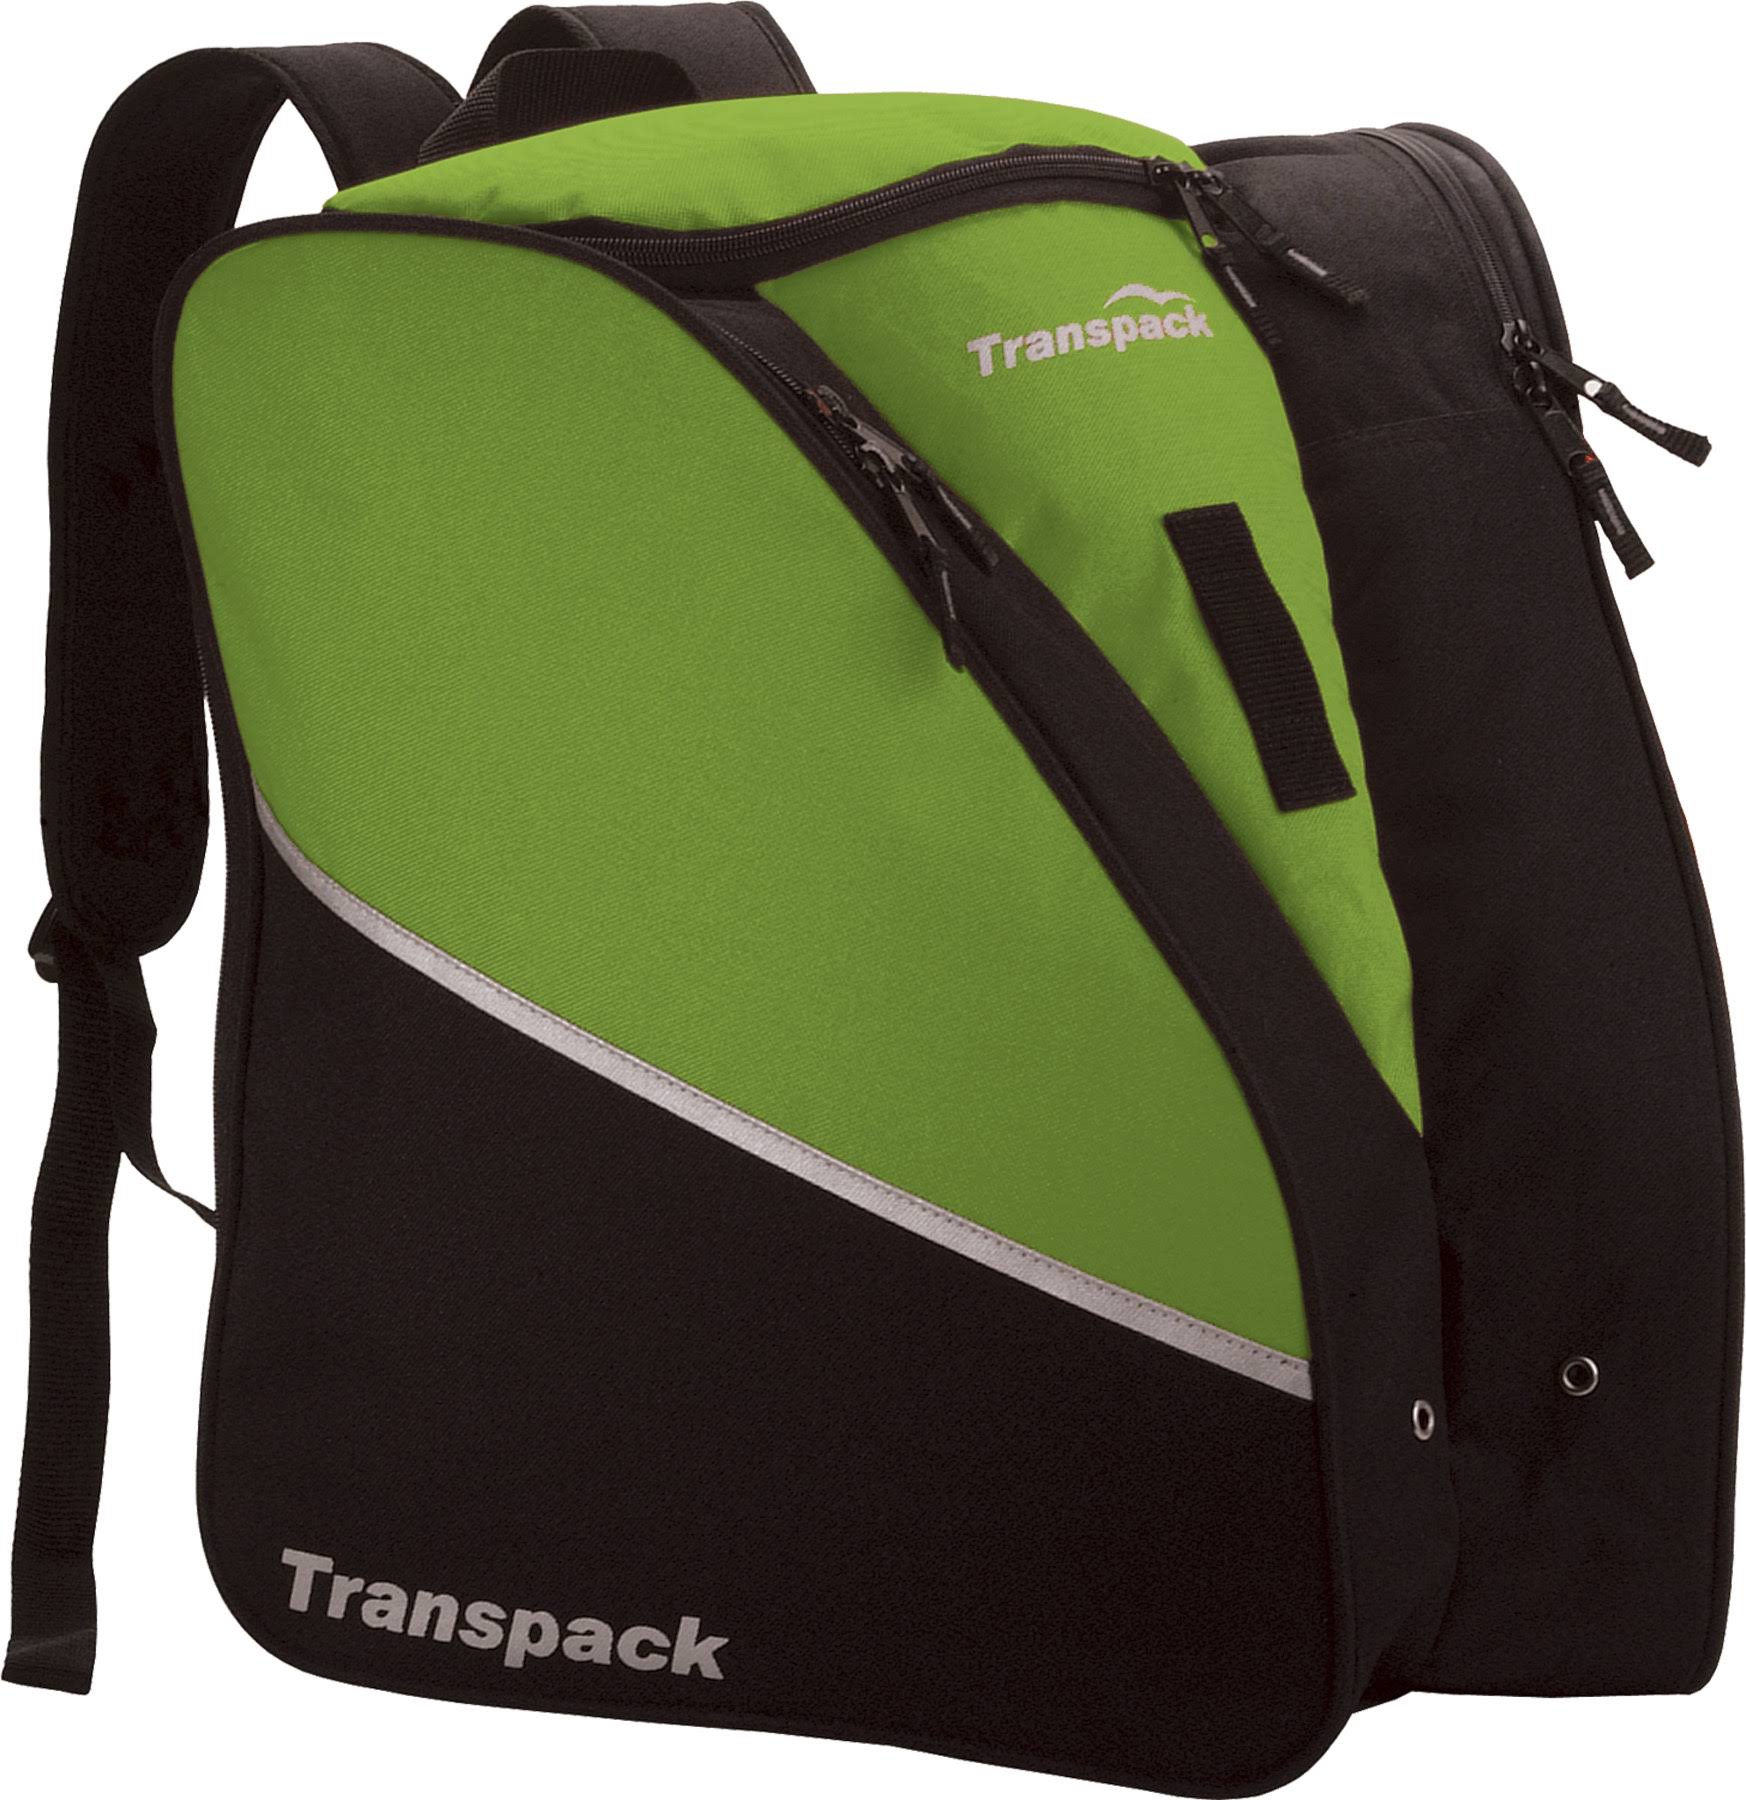 Transpack - Edge Jr Solid Boot Bag - Lime